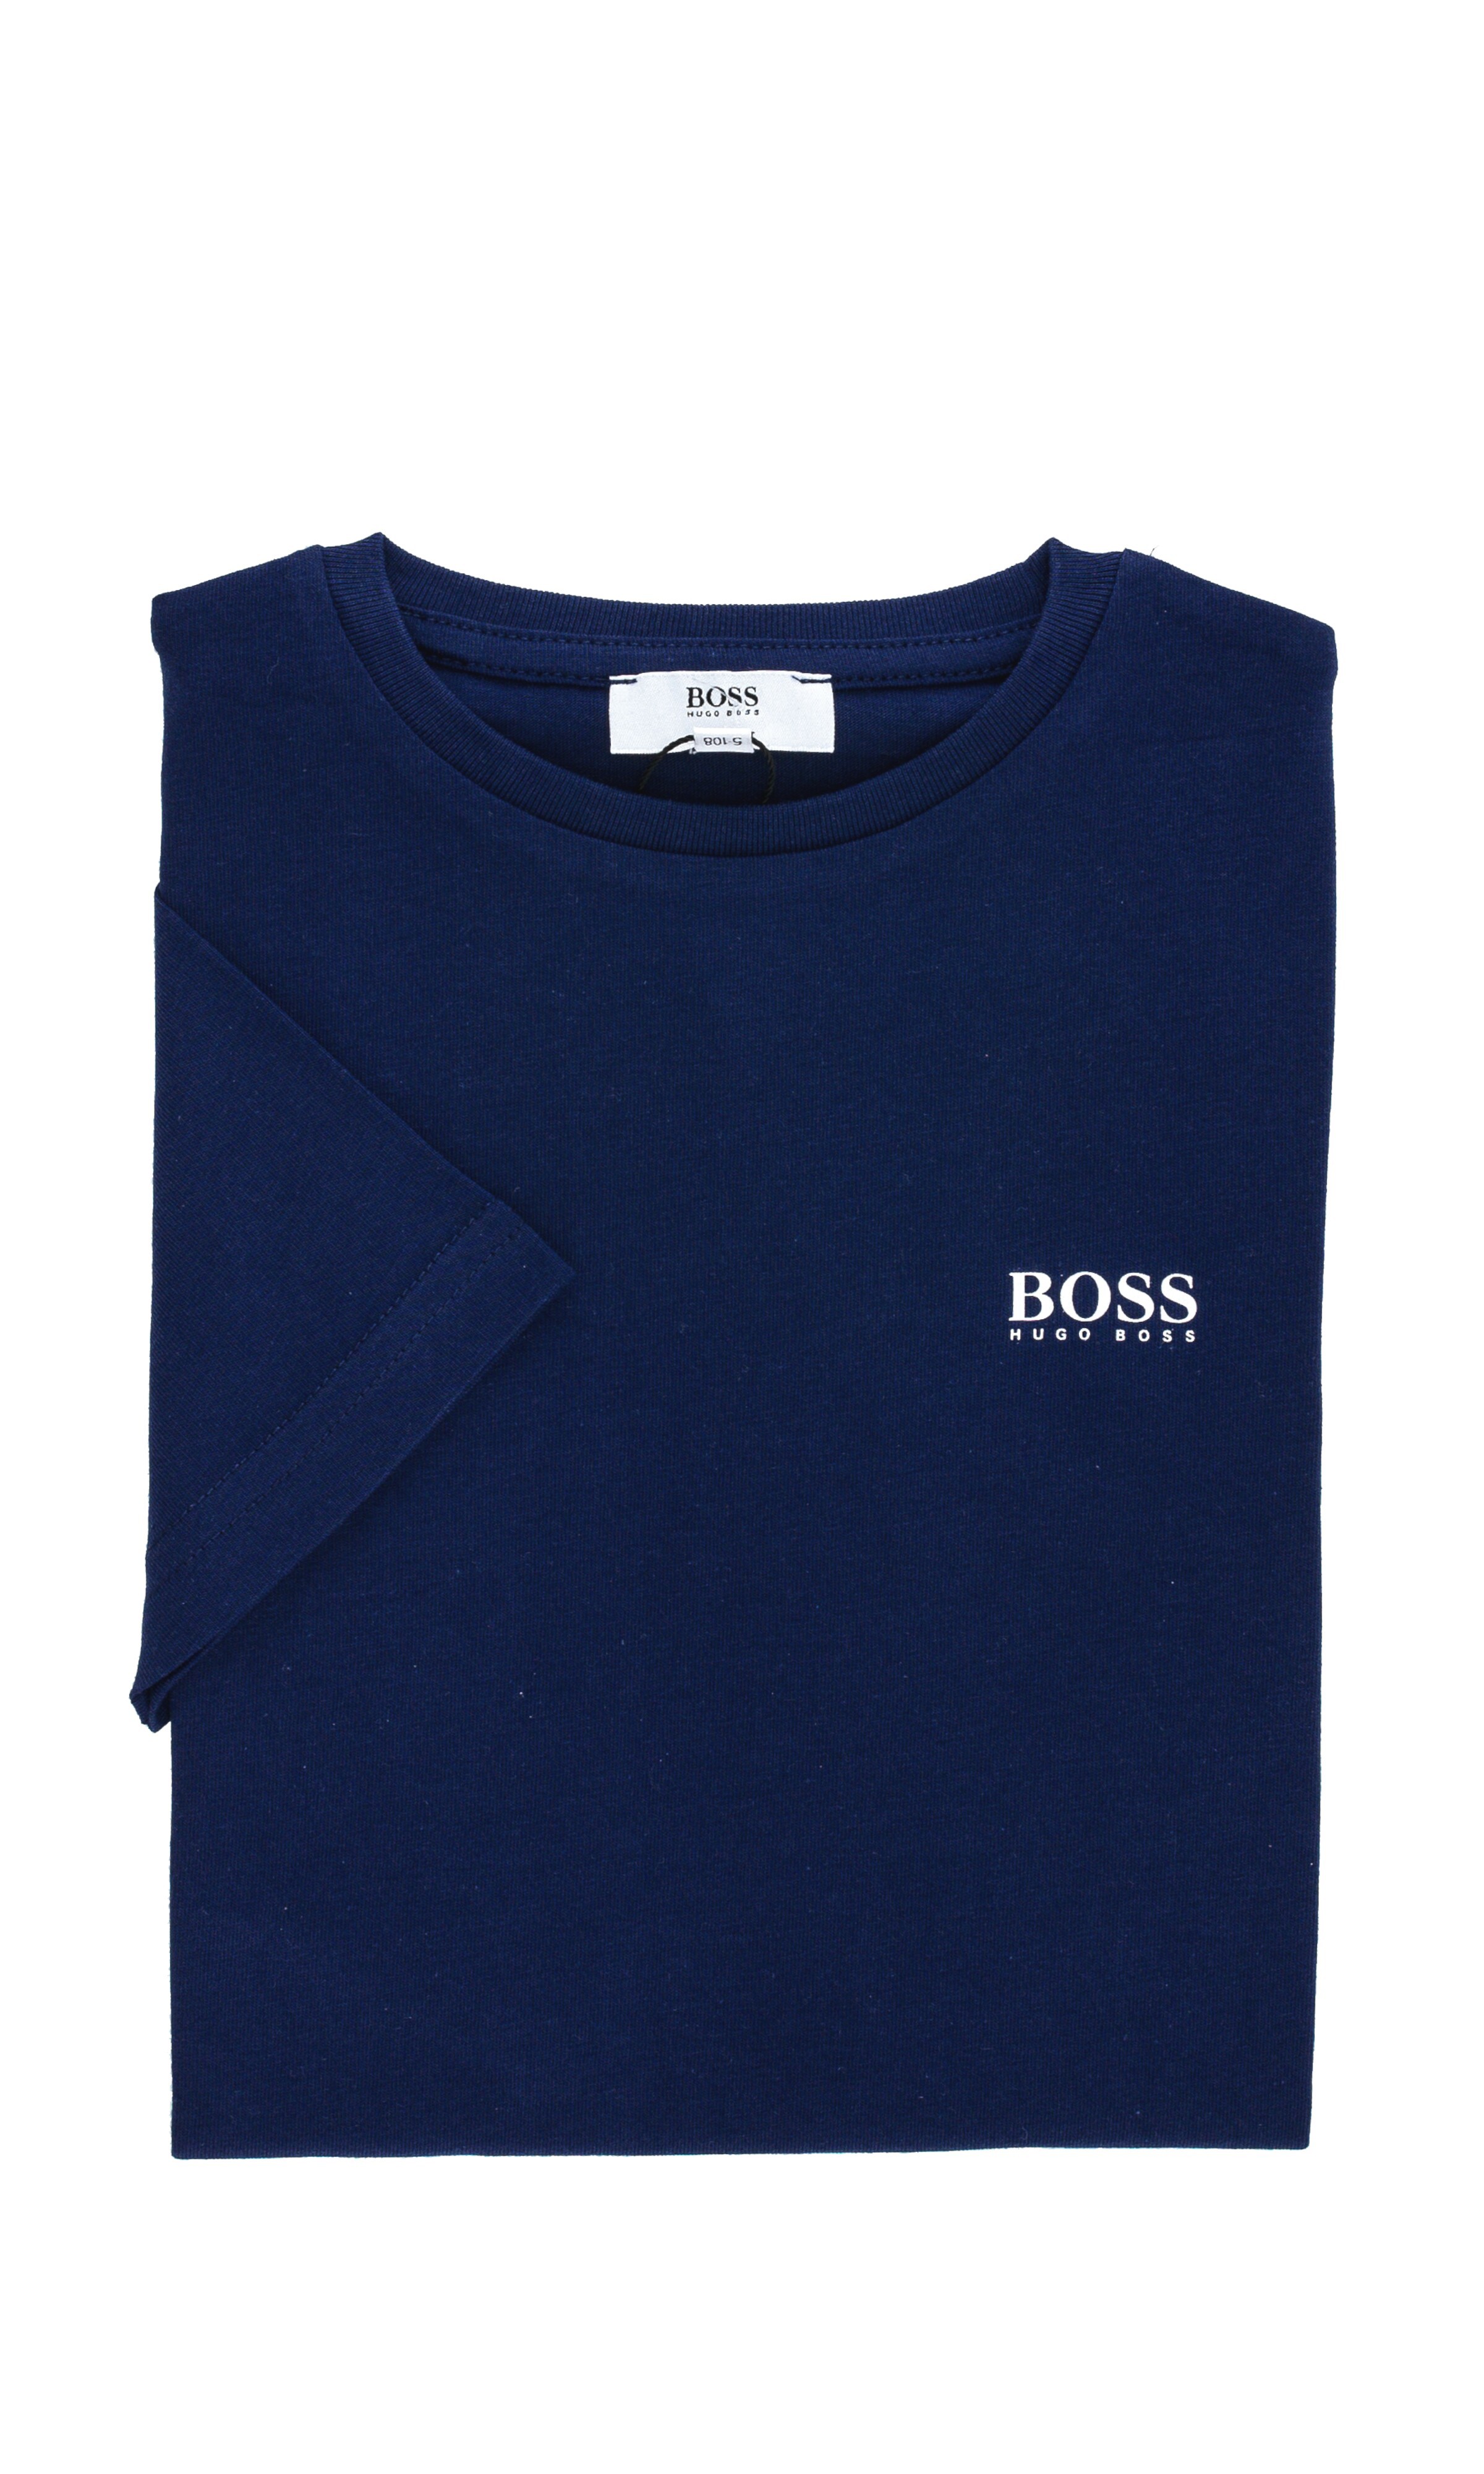 blue hugo boss top